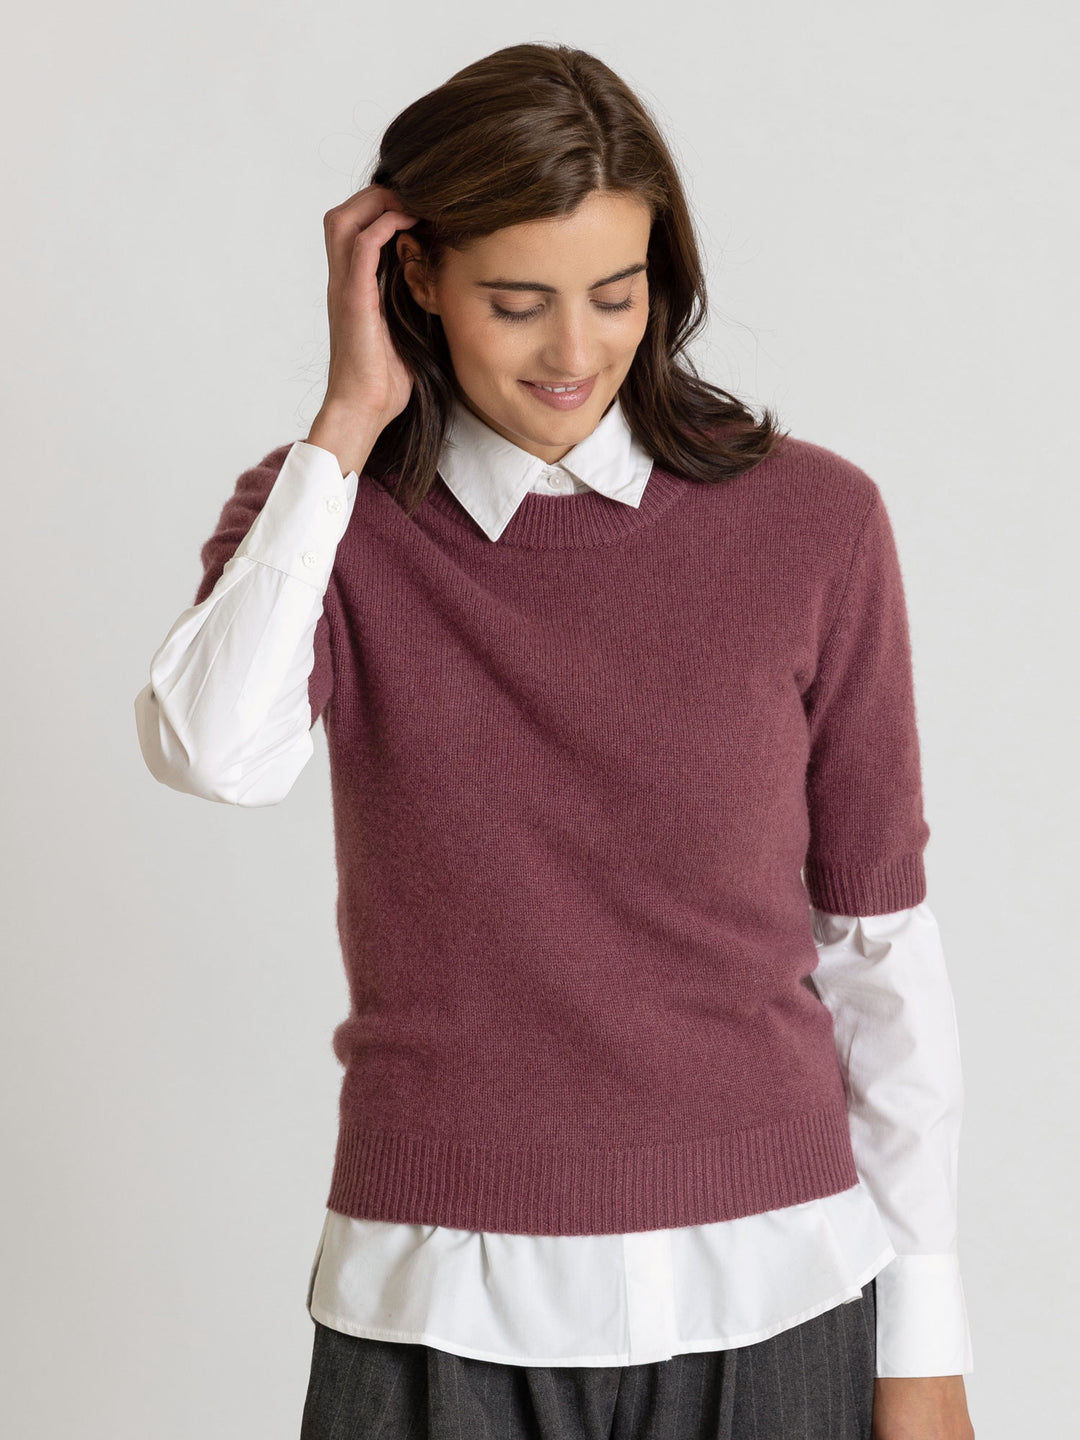 Cashmere sweater "Sofia", wild plum. 100% cashmere from Kashmina